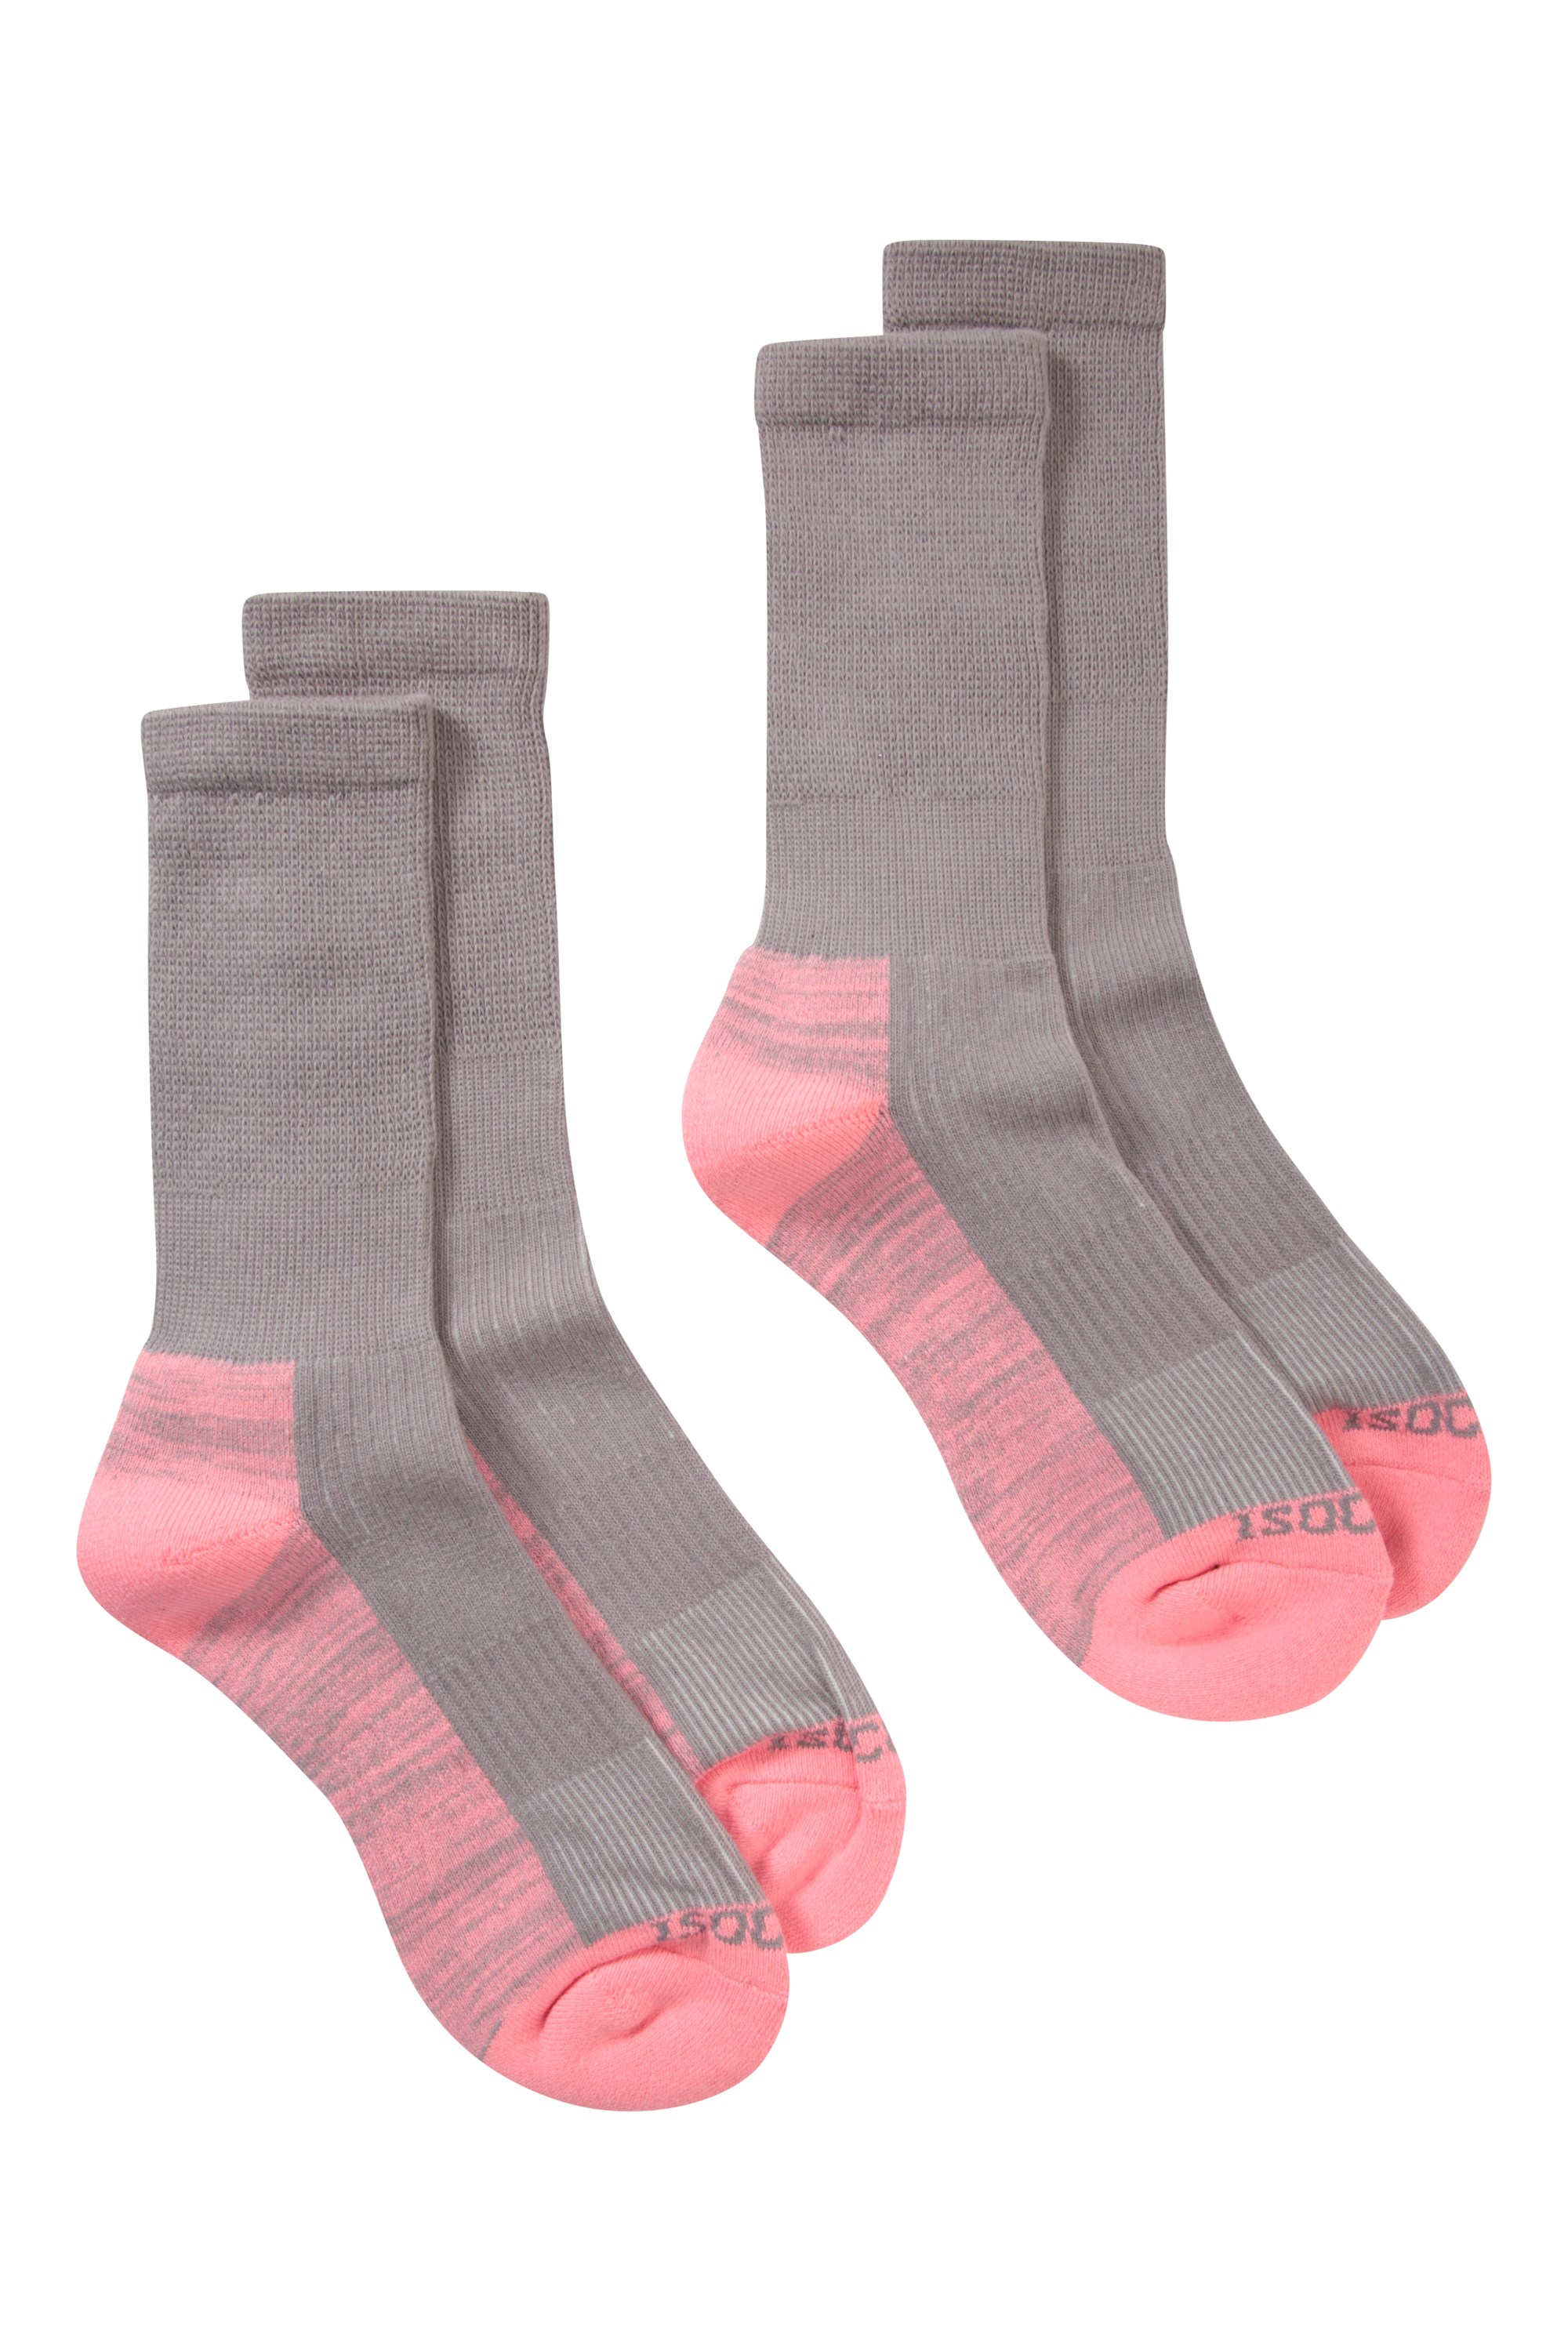 IsoCool Womens Hiker Socks Multipack - Grey